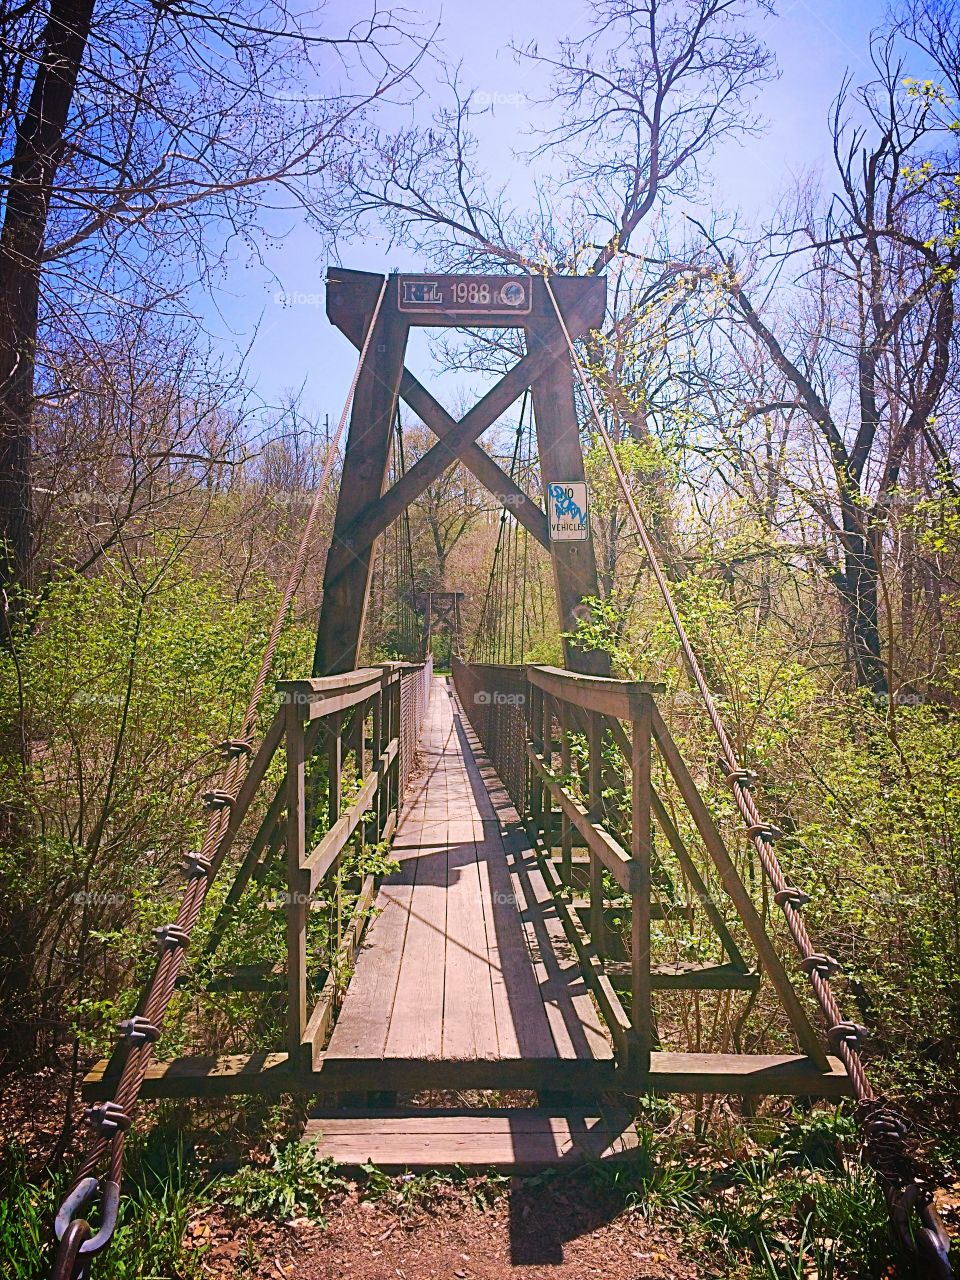 Swinging bridge . Wooden swinging bridge entrance 